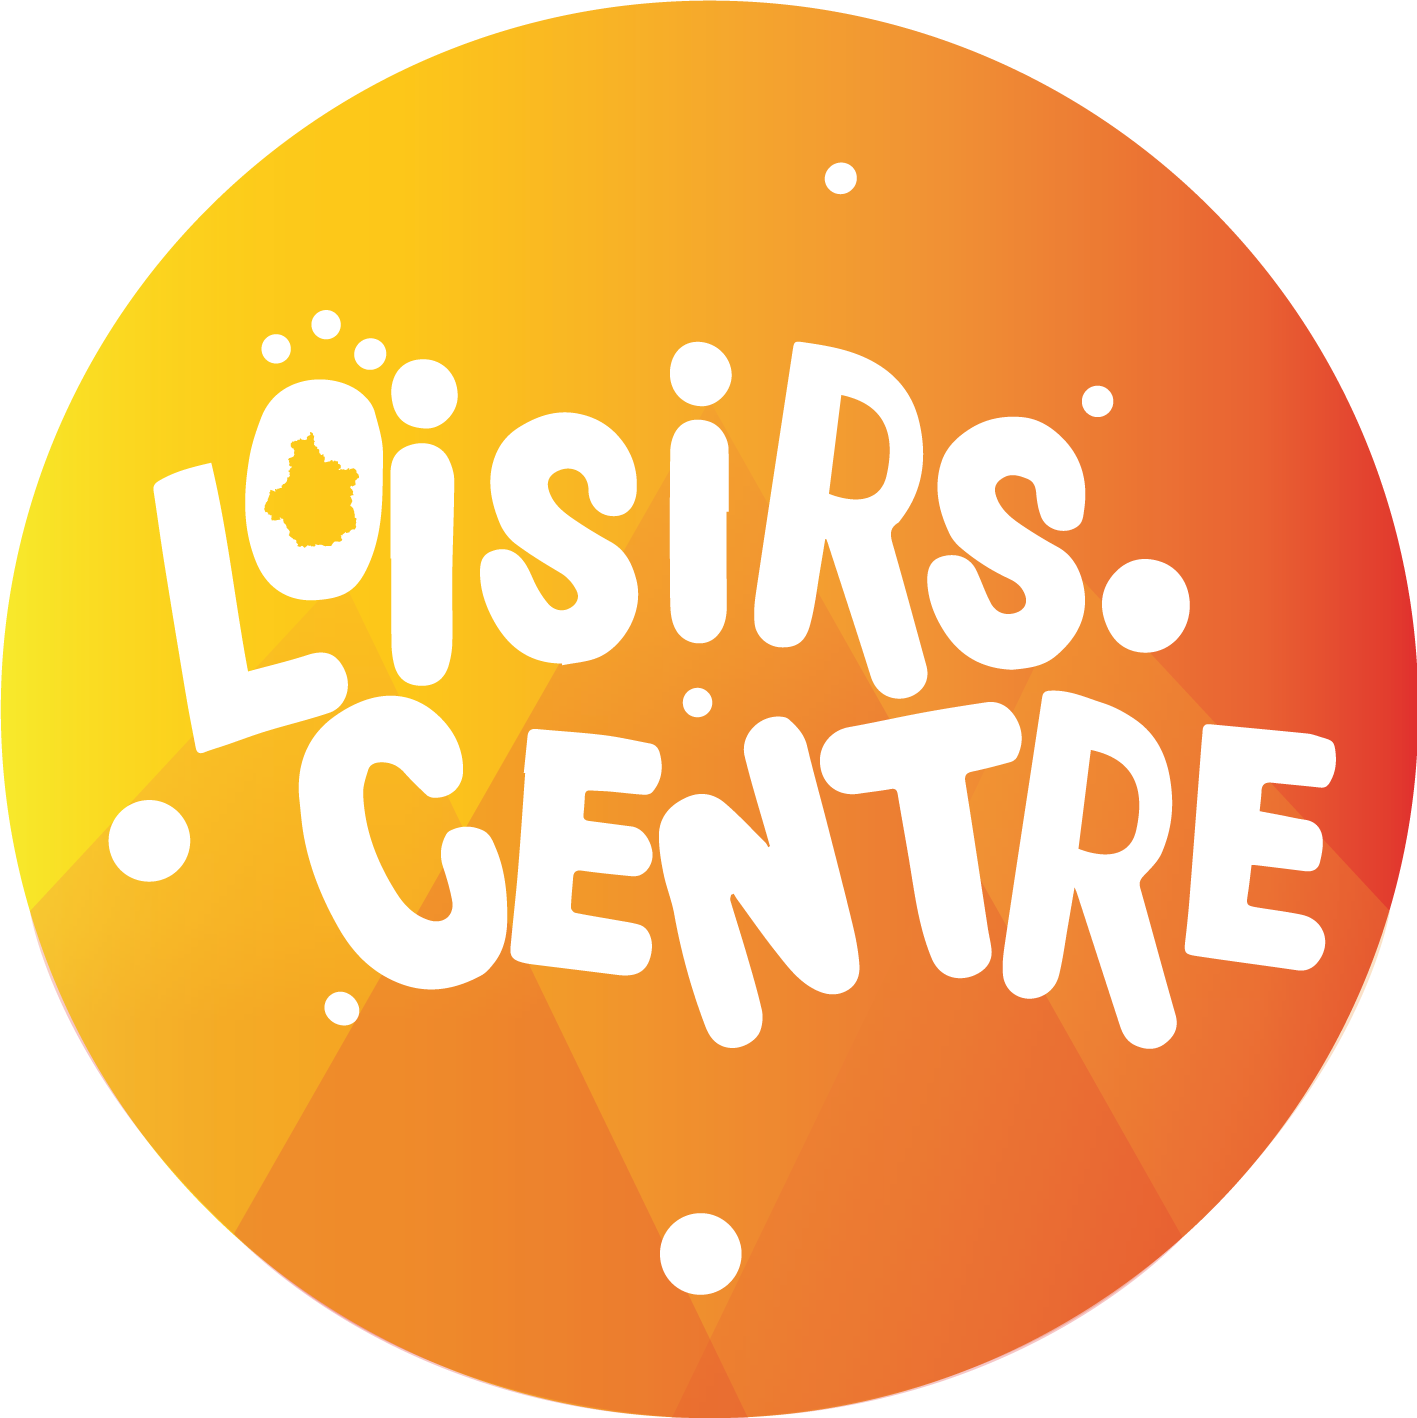 Loisirs centre